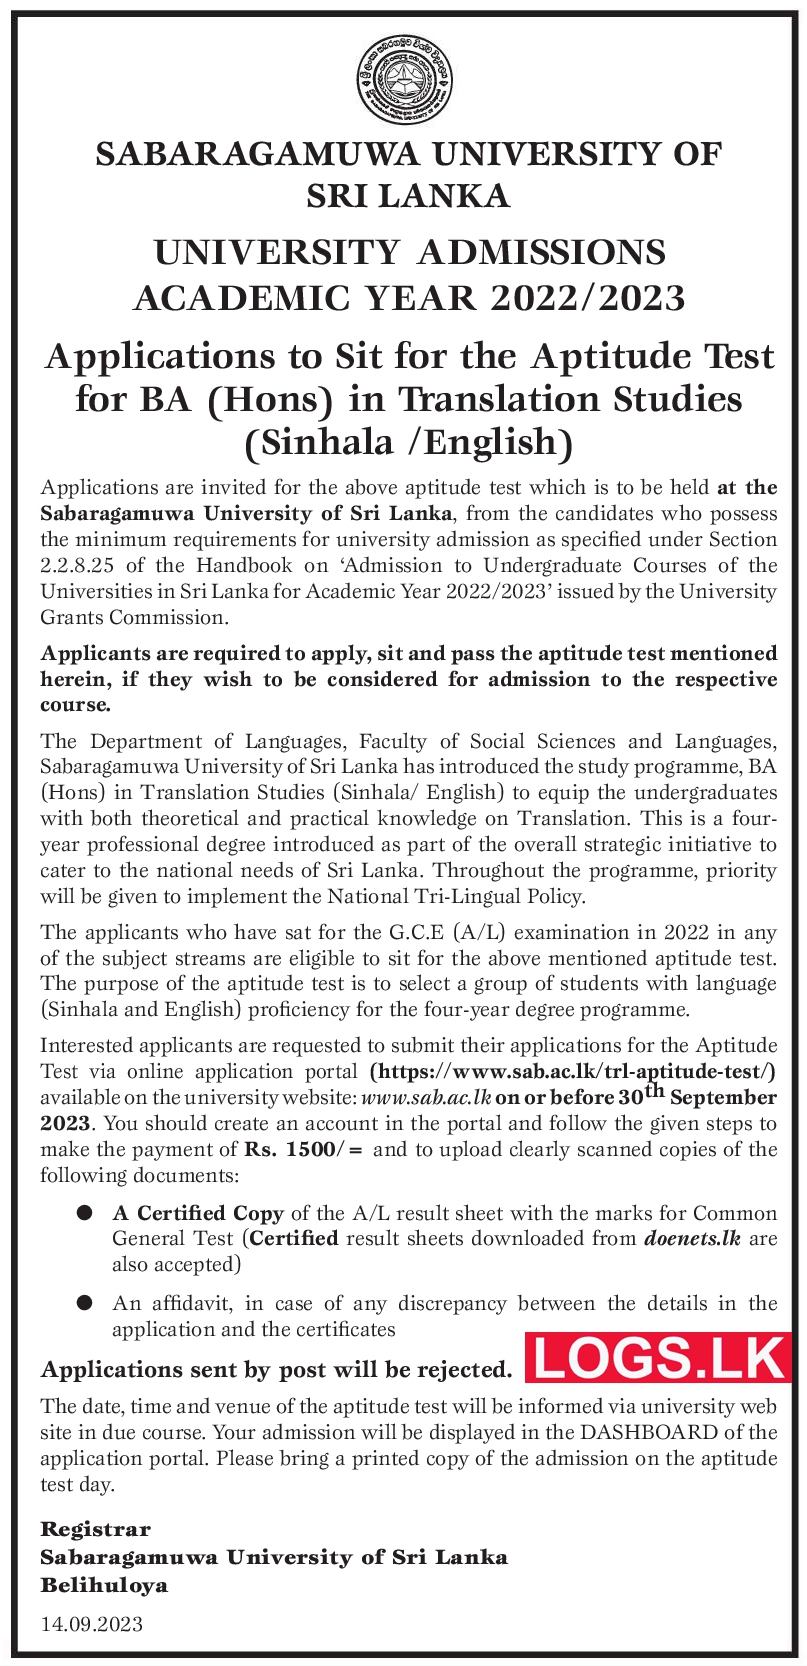 Applications to Sit for the Aptitude Test for BA (Hons) in Translation Studies 2023 (Sinhala / English) - Sabaragamuwa University Apply Online